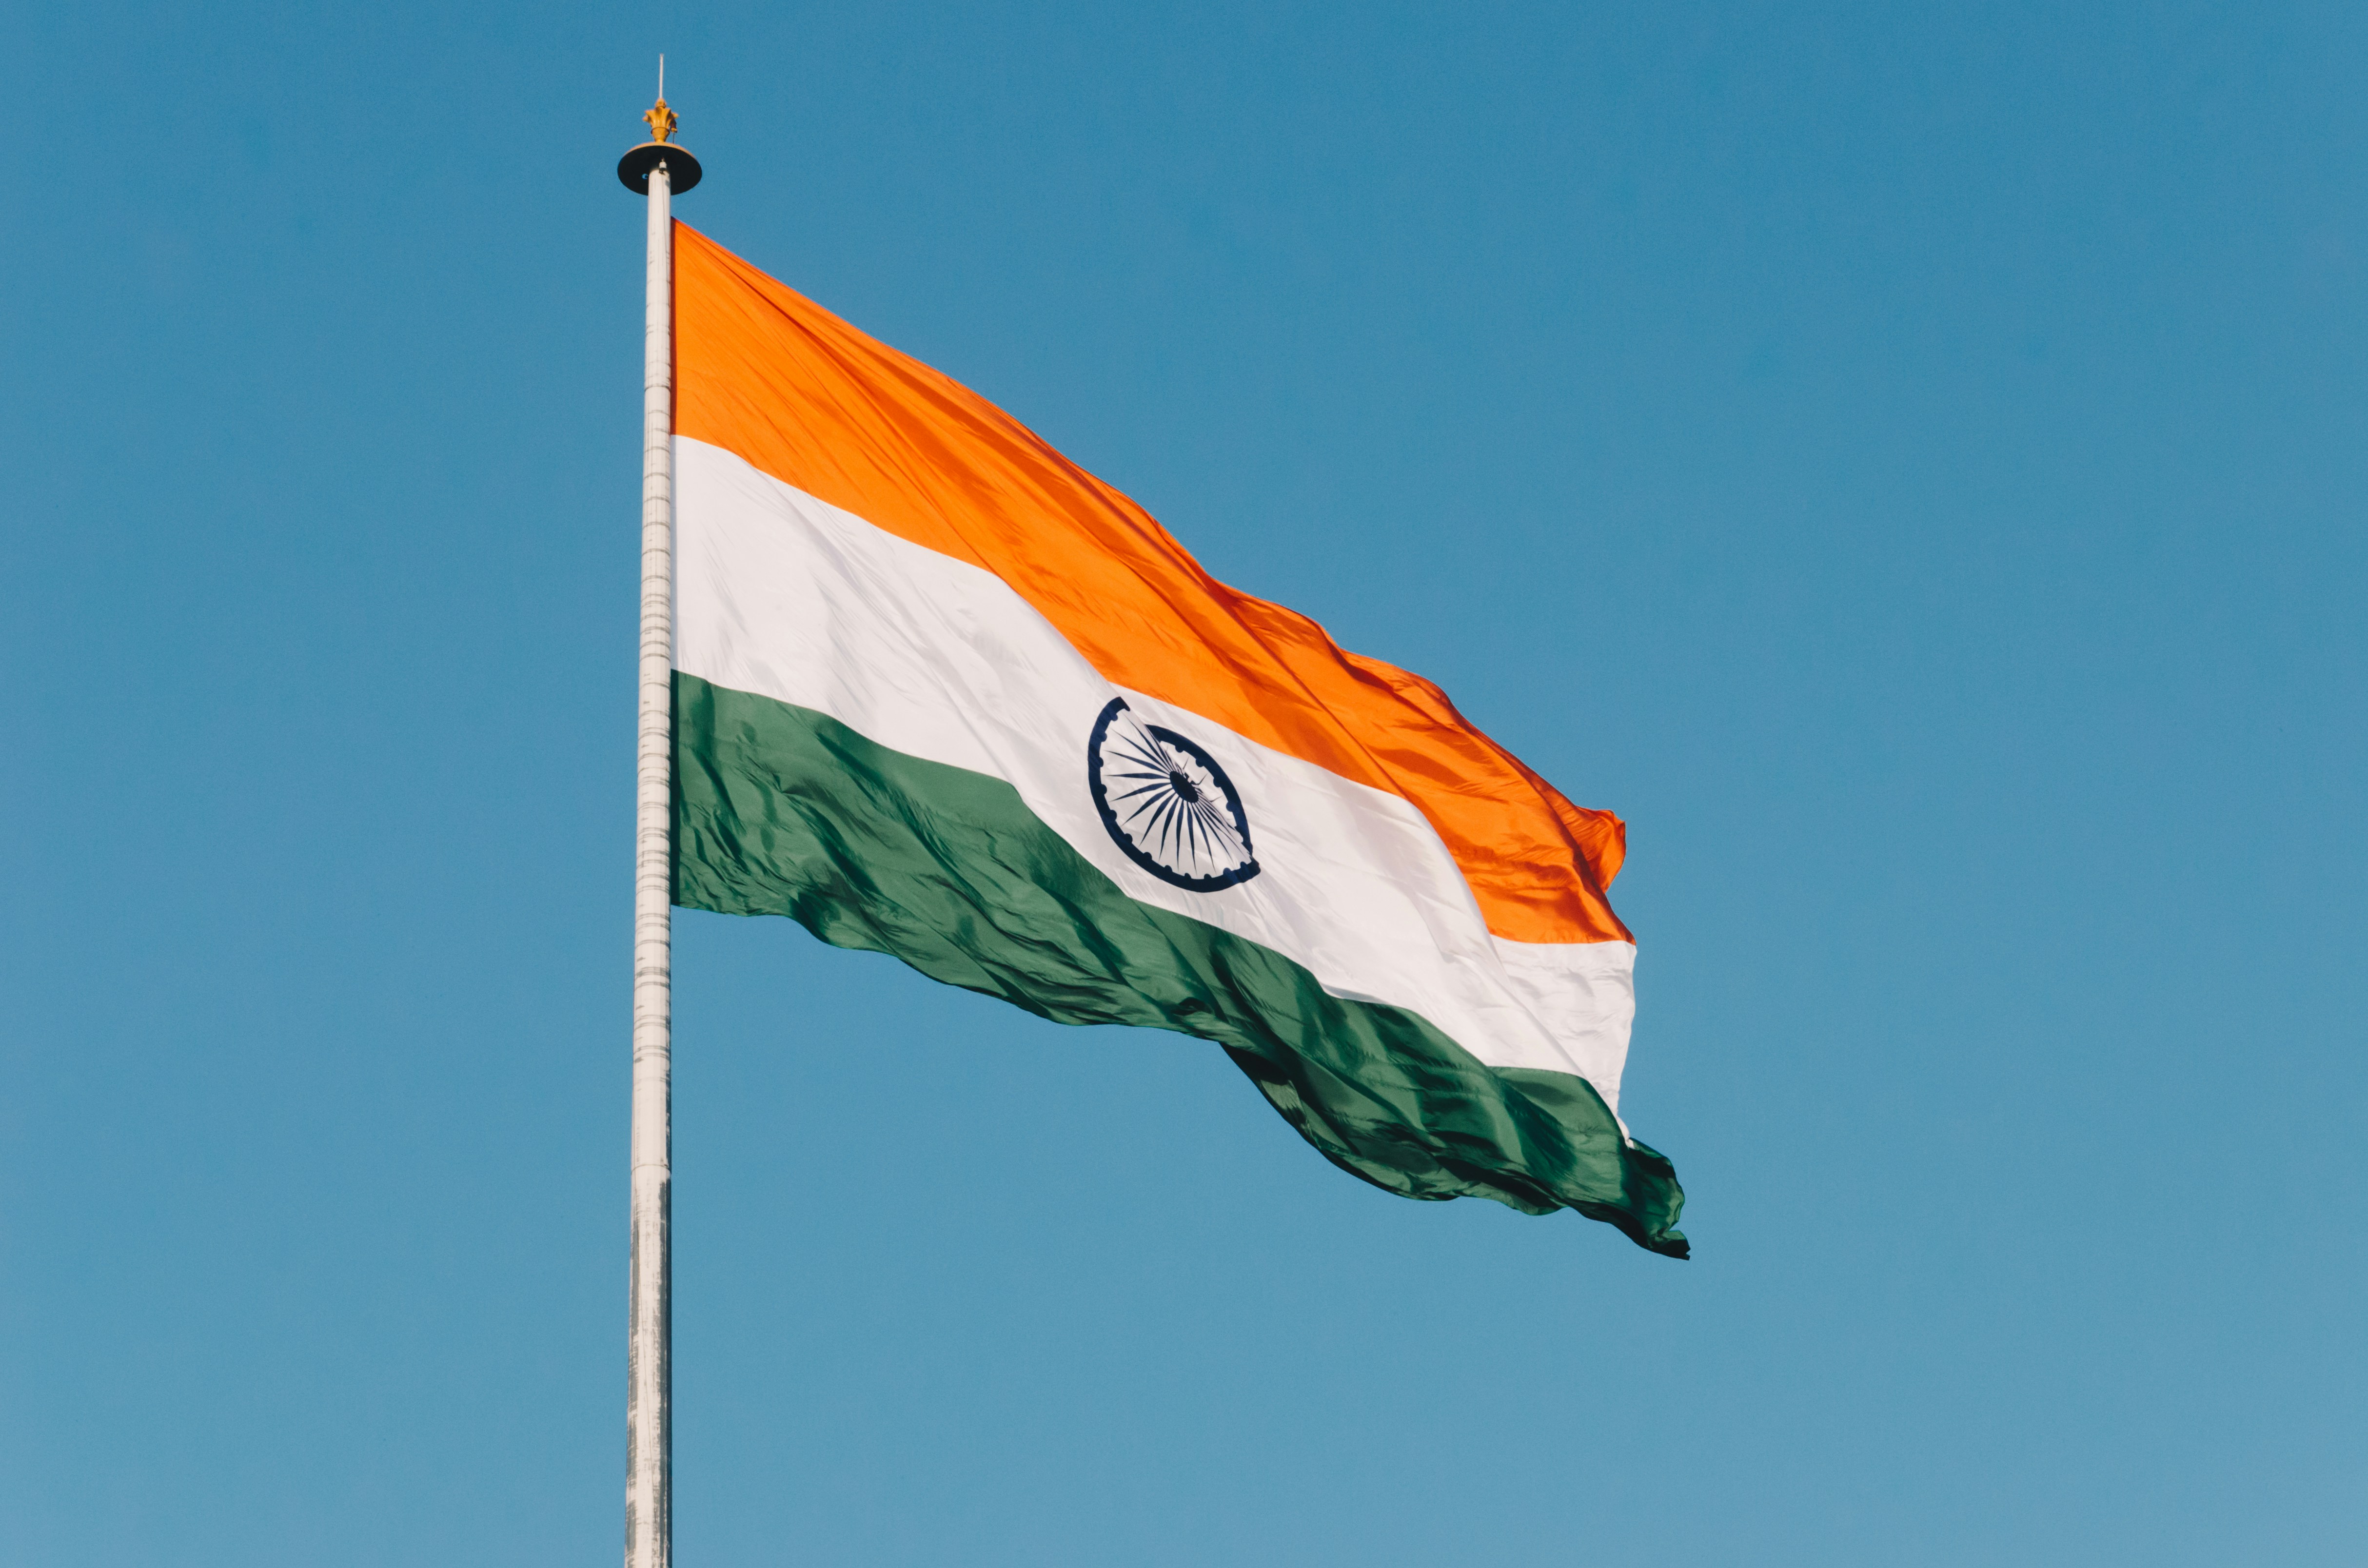 Indian flag; image by Naveed Ahmed, via Unsplash.com.